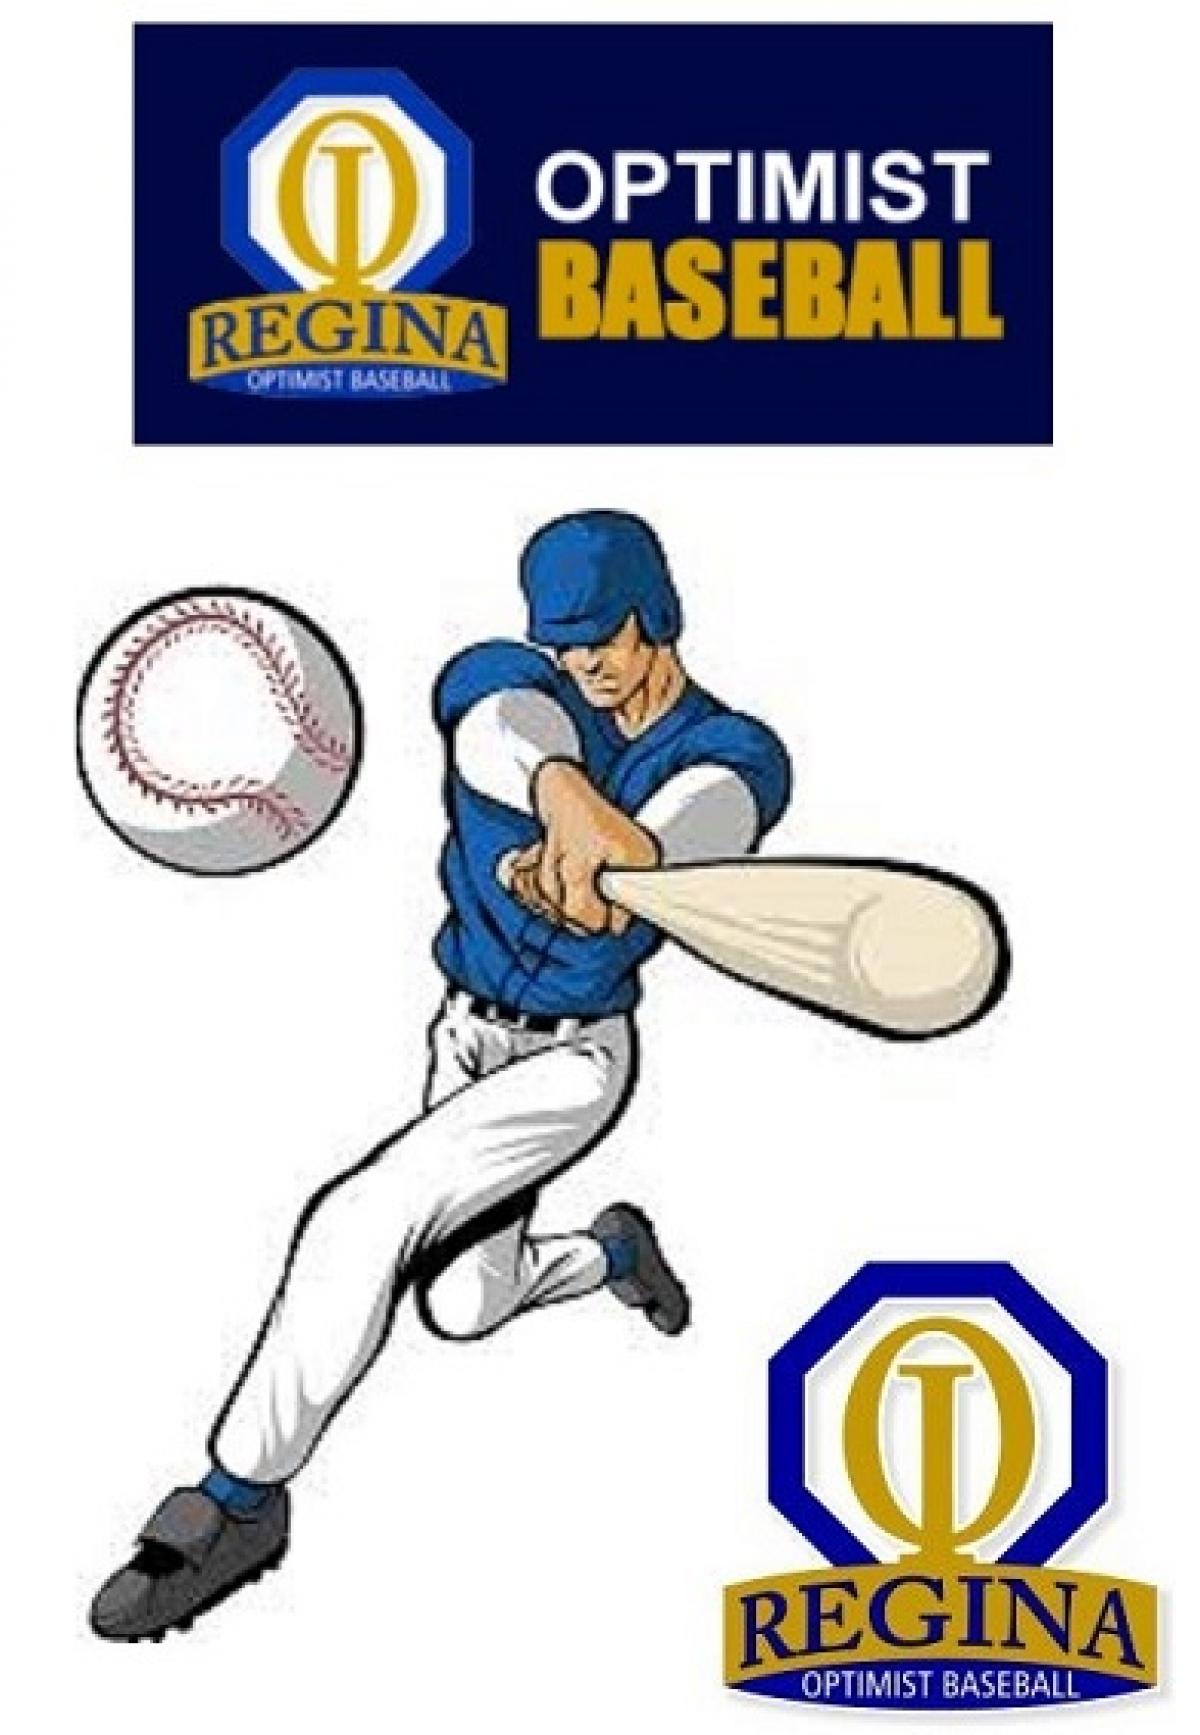 Register for 2022 Regina Optimist Jr League